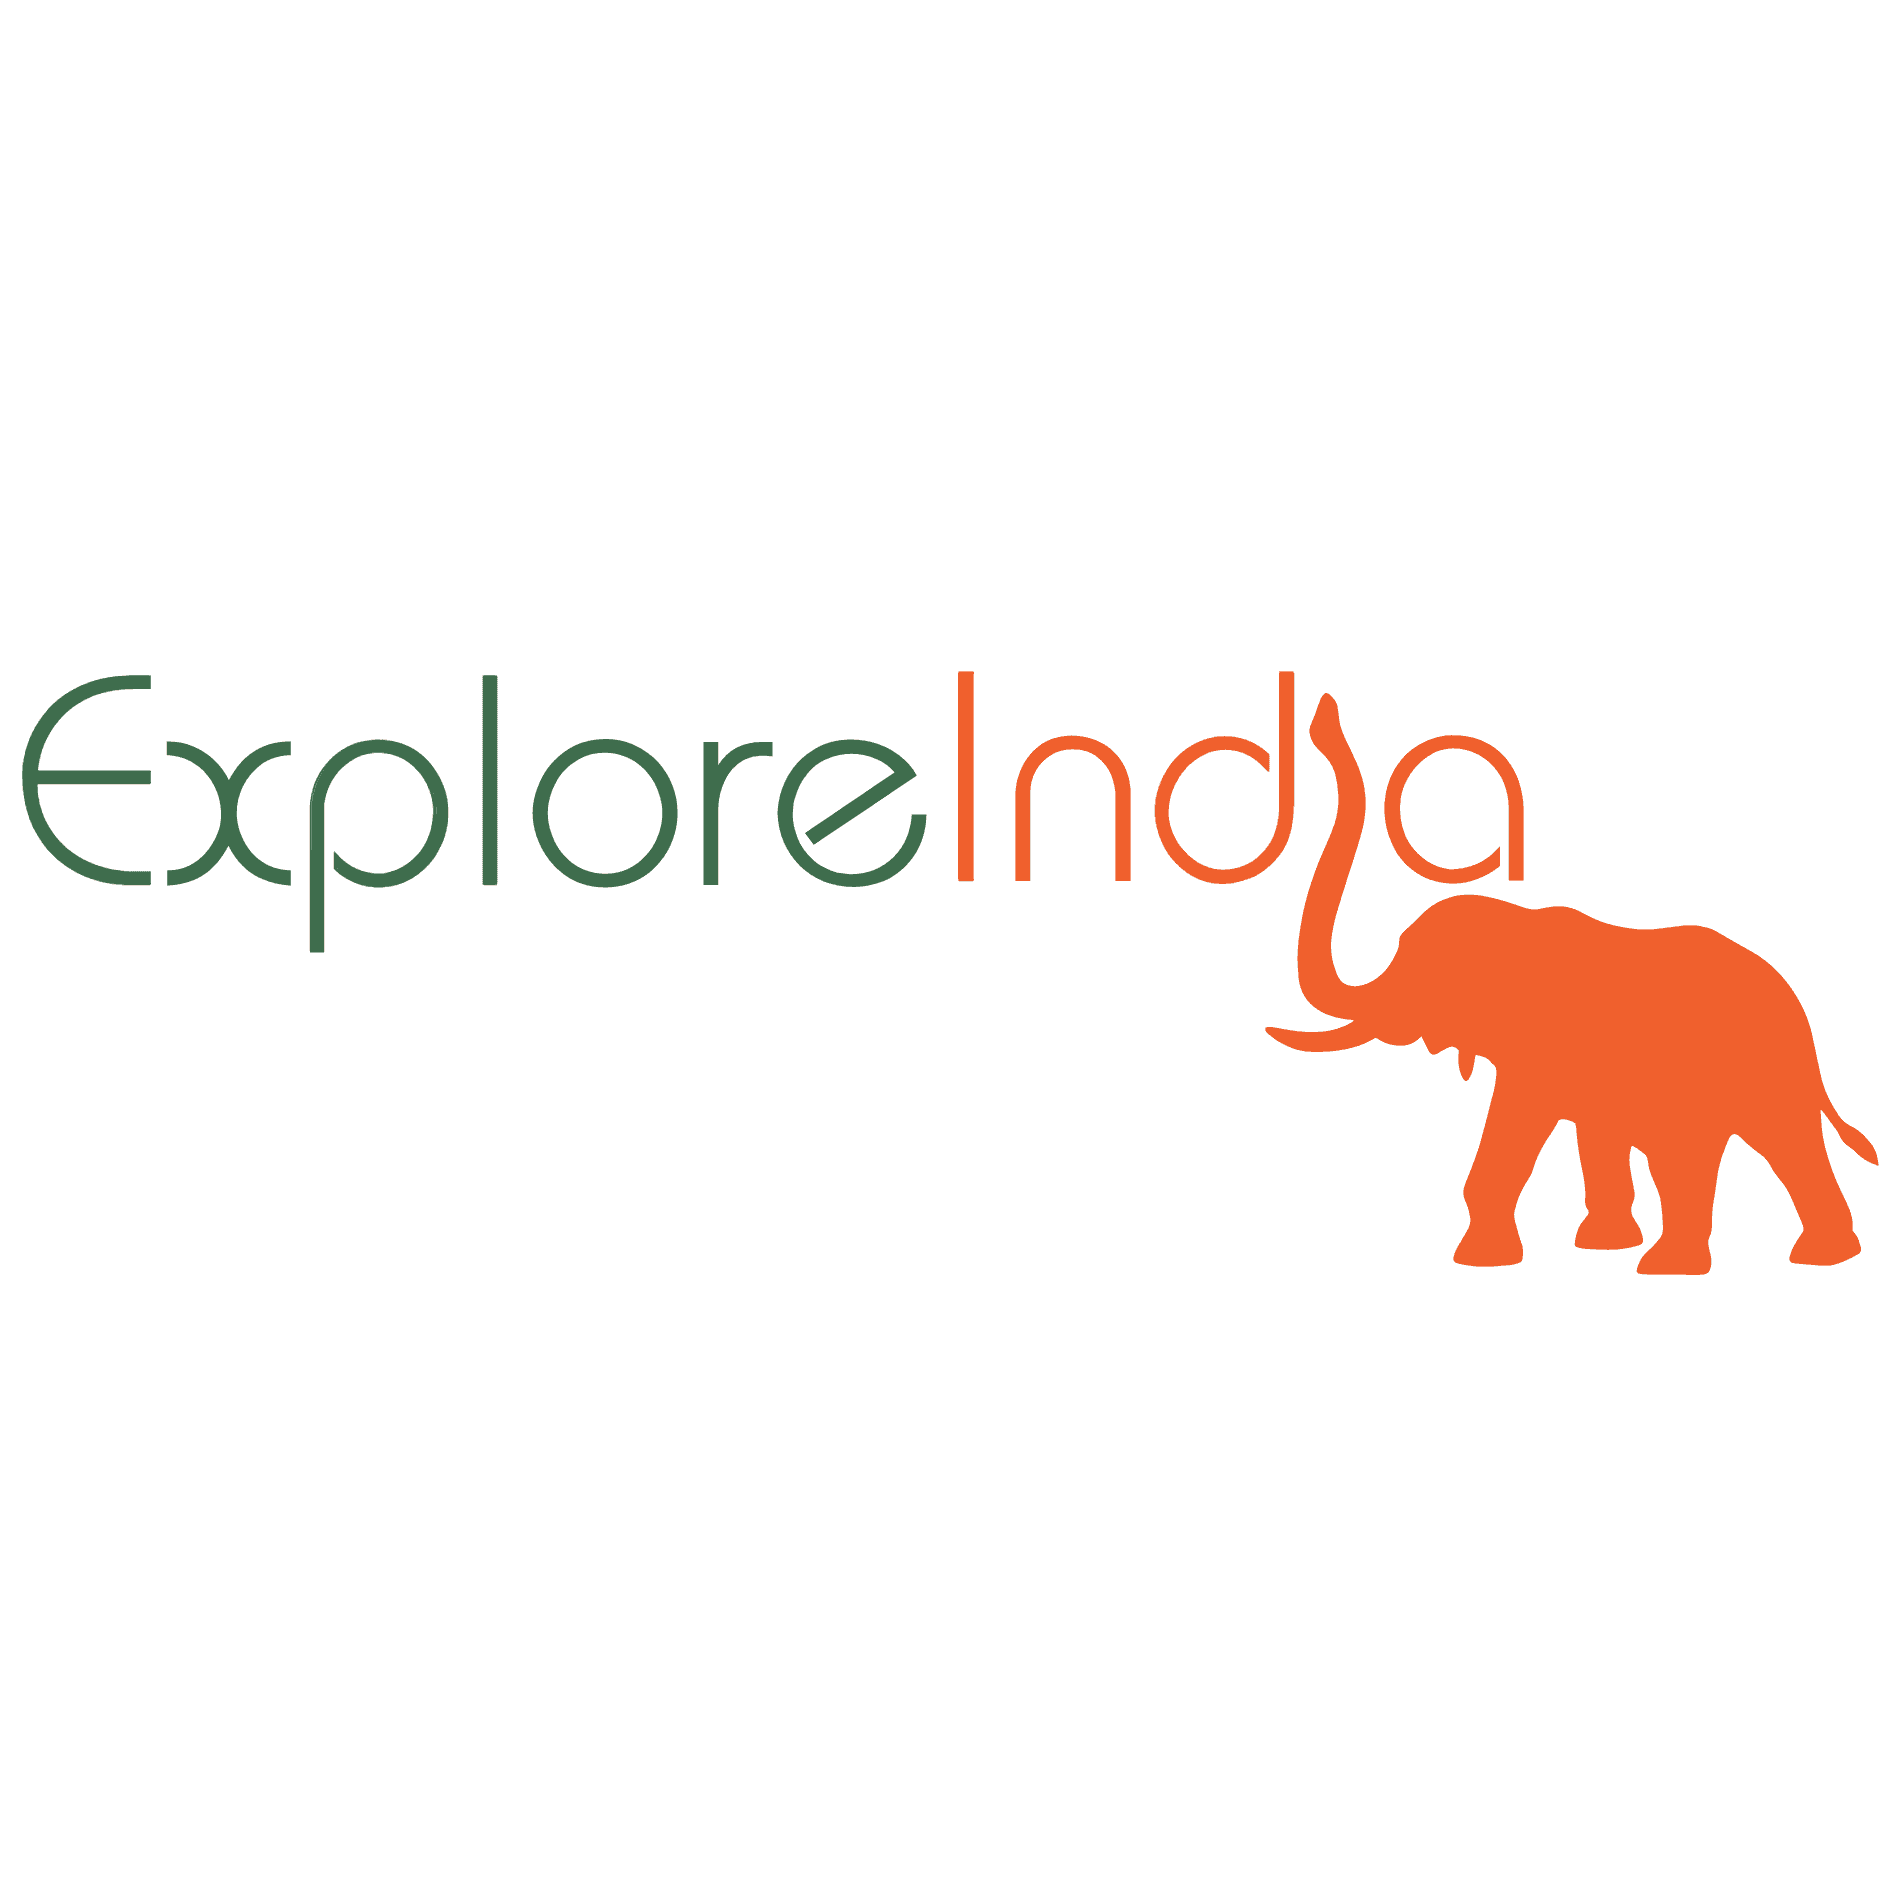 <p><span class="ql-font-lato">Explore India</span></p> logo